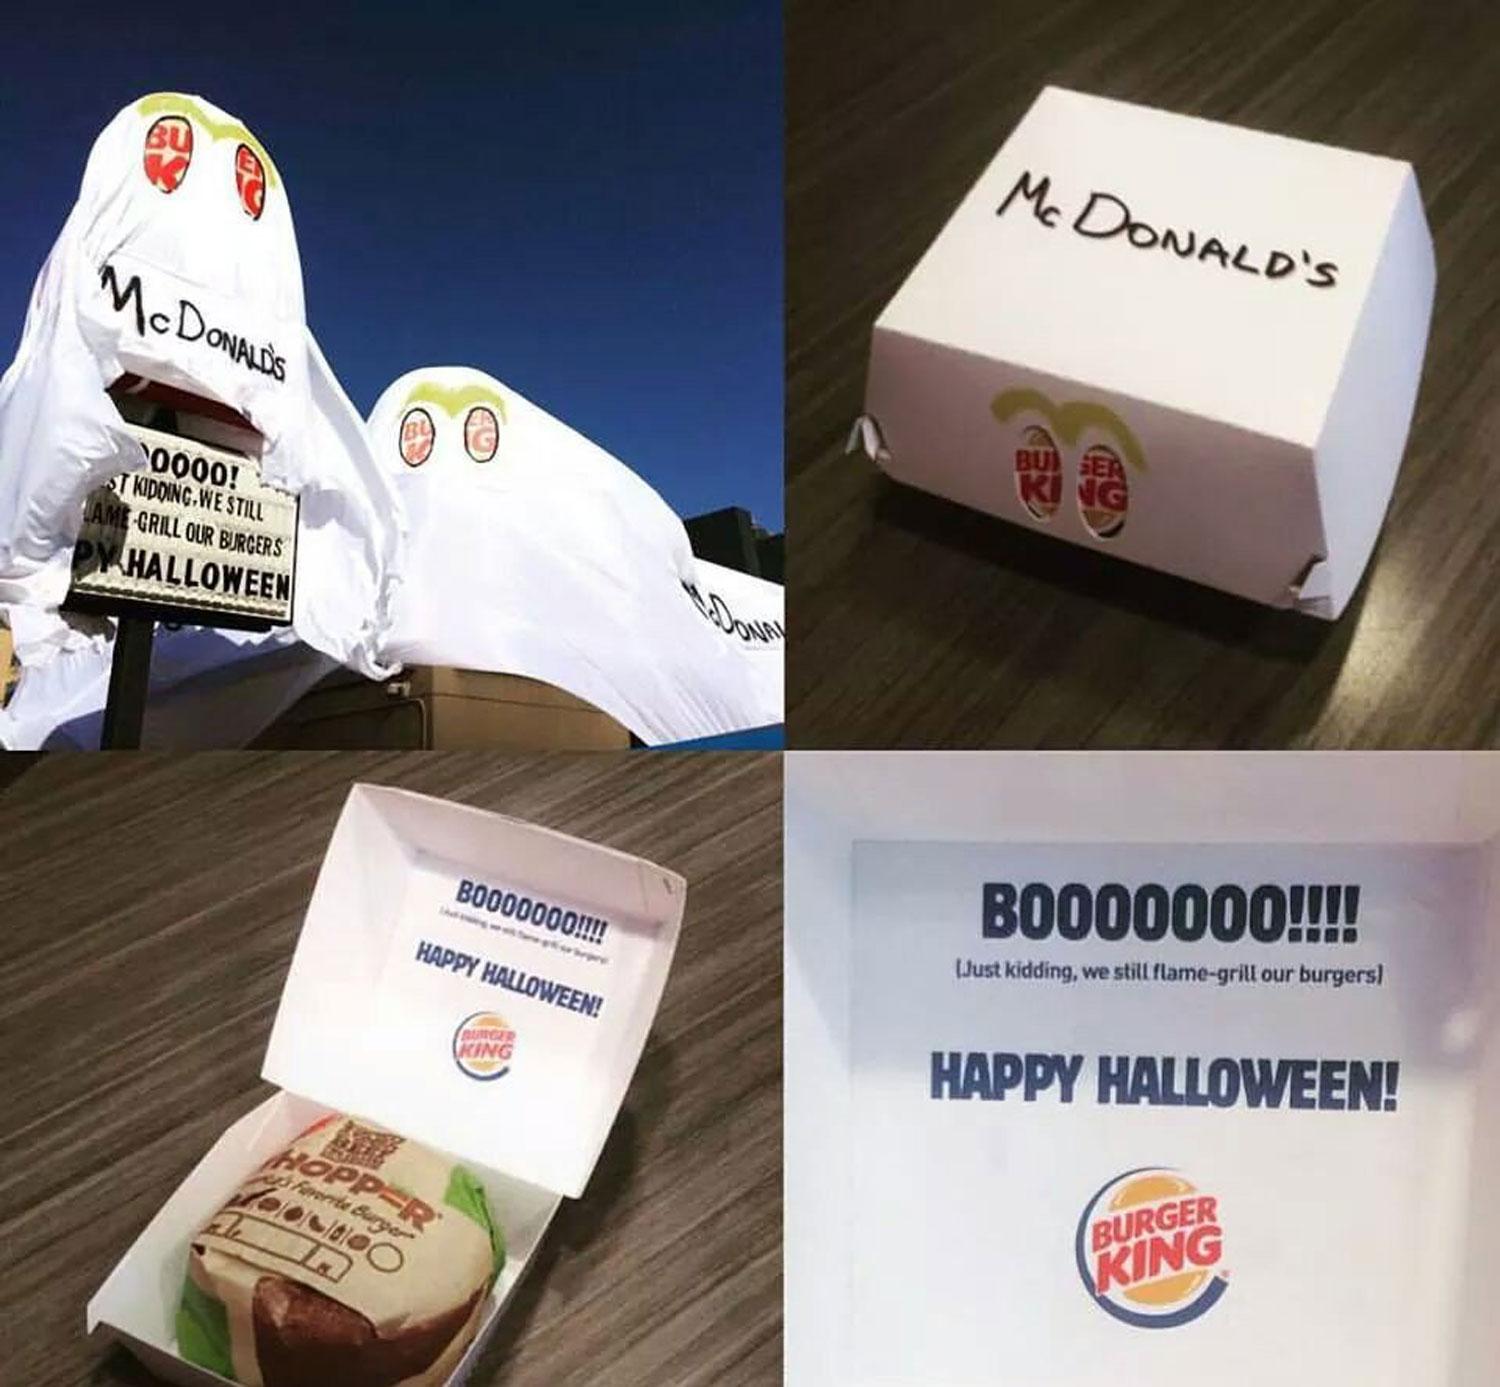 image restaurante burger king se vistio mcdonalds para halloween 823674 193342